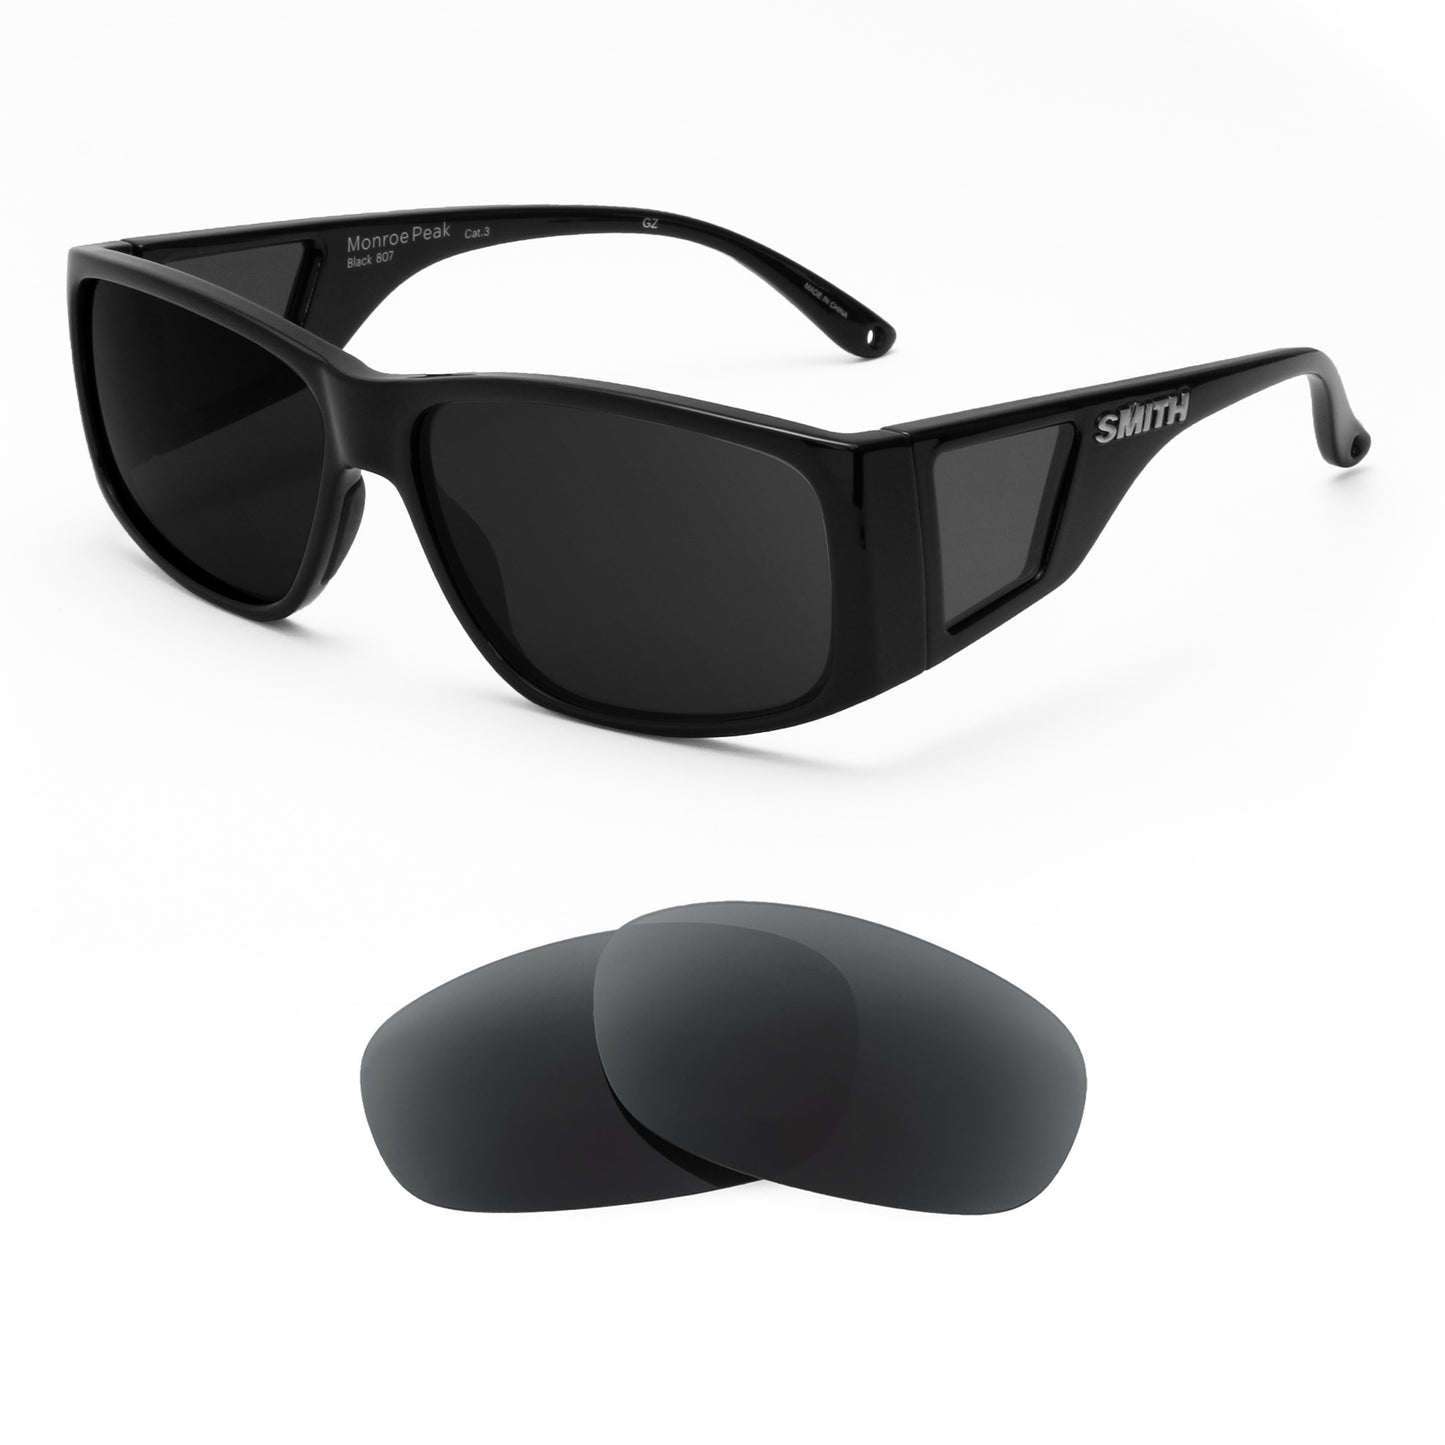 Smith Monroe Peak sunglasses with replacement lenses